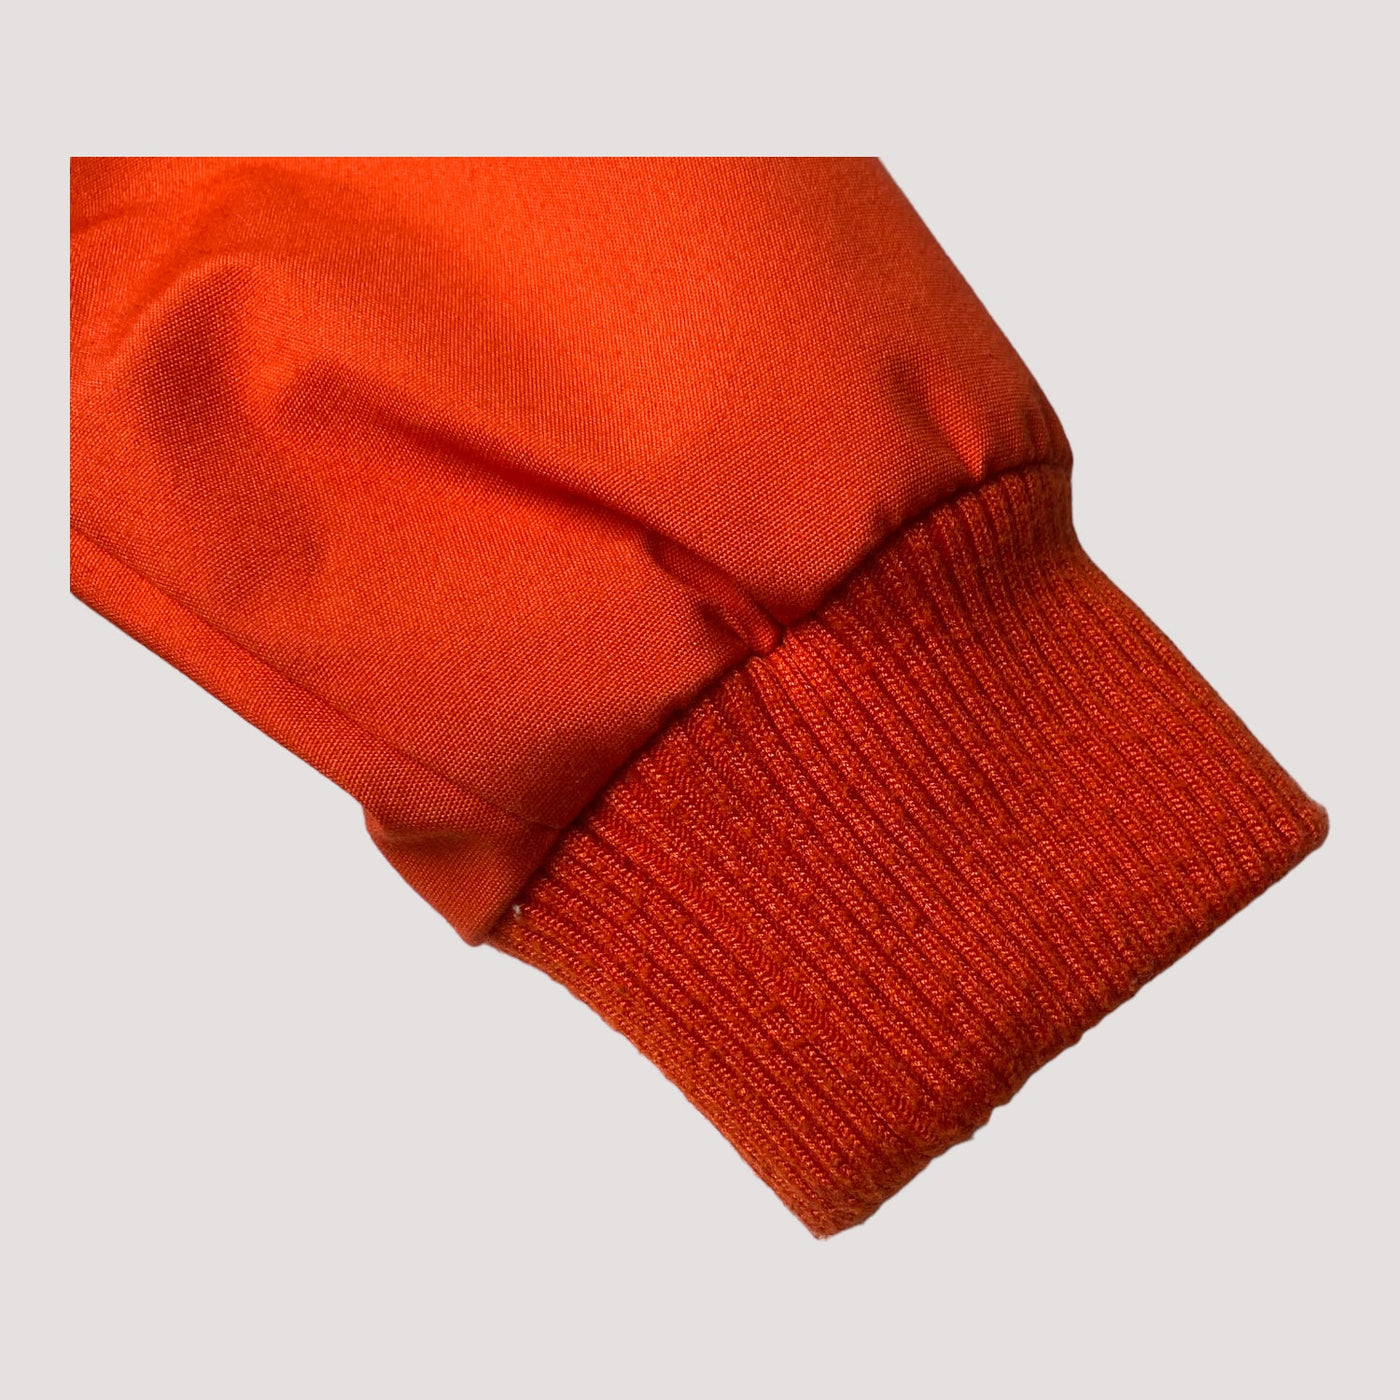 pico jacket, red | 104/110cm